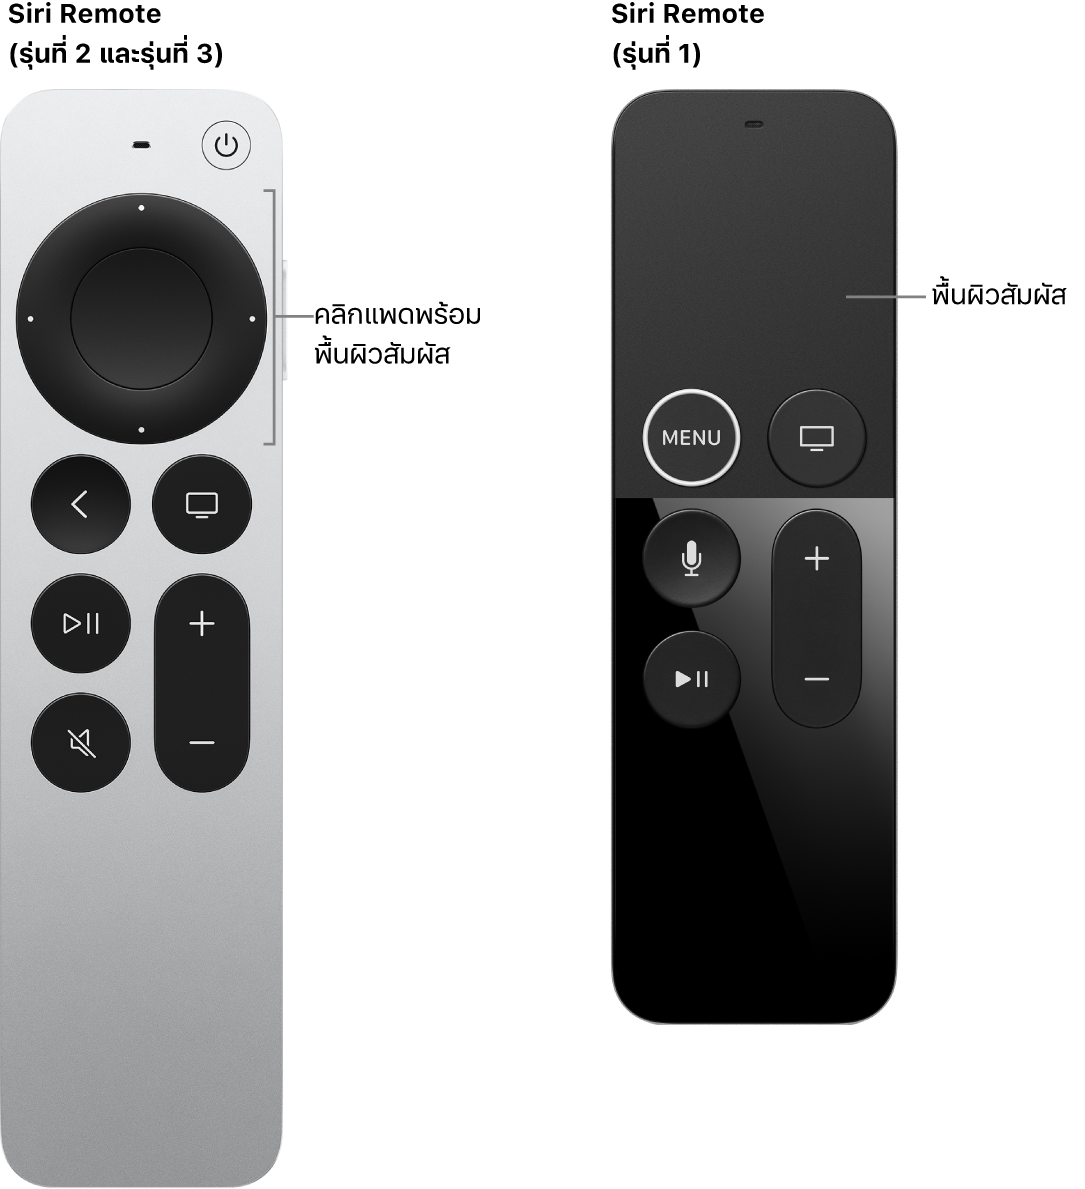 Siri Remote (รุ่นที่ 2 และรุ่นที่ 3) ที่มีคลิกแพด และ Siri Remote (รุ่นที่ 1) ที่มีพื้นผิวสัมผัส